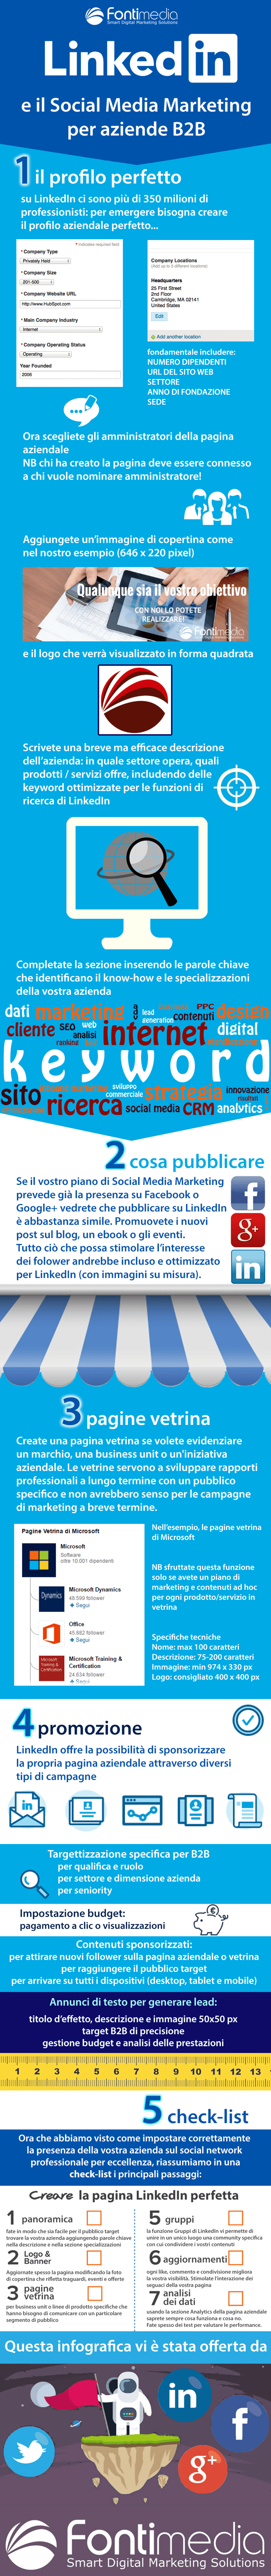 social-media-marketing-aziendale-linkedin